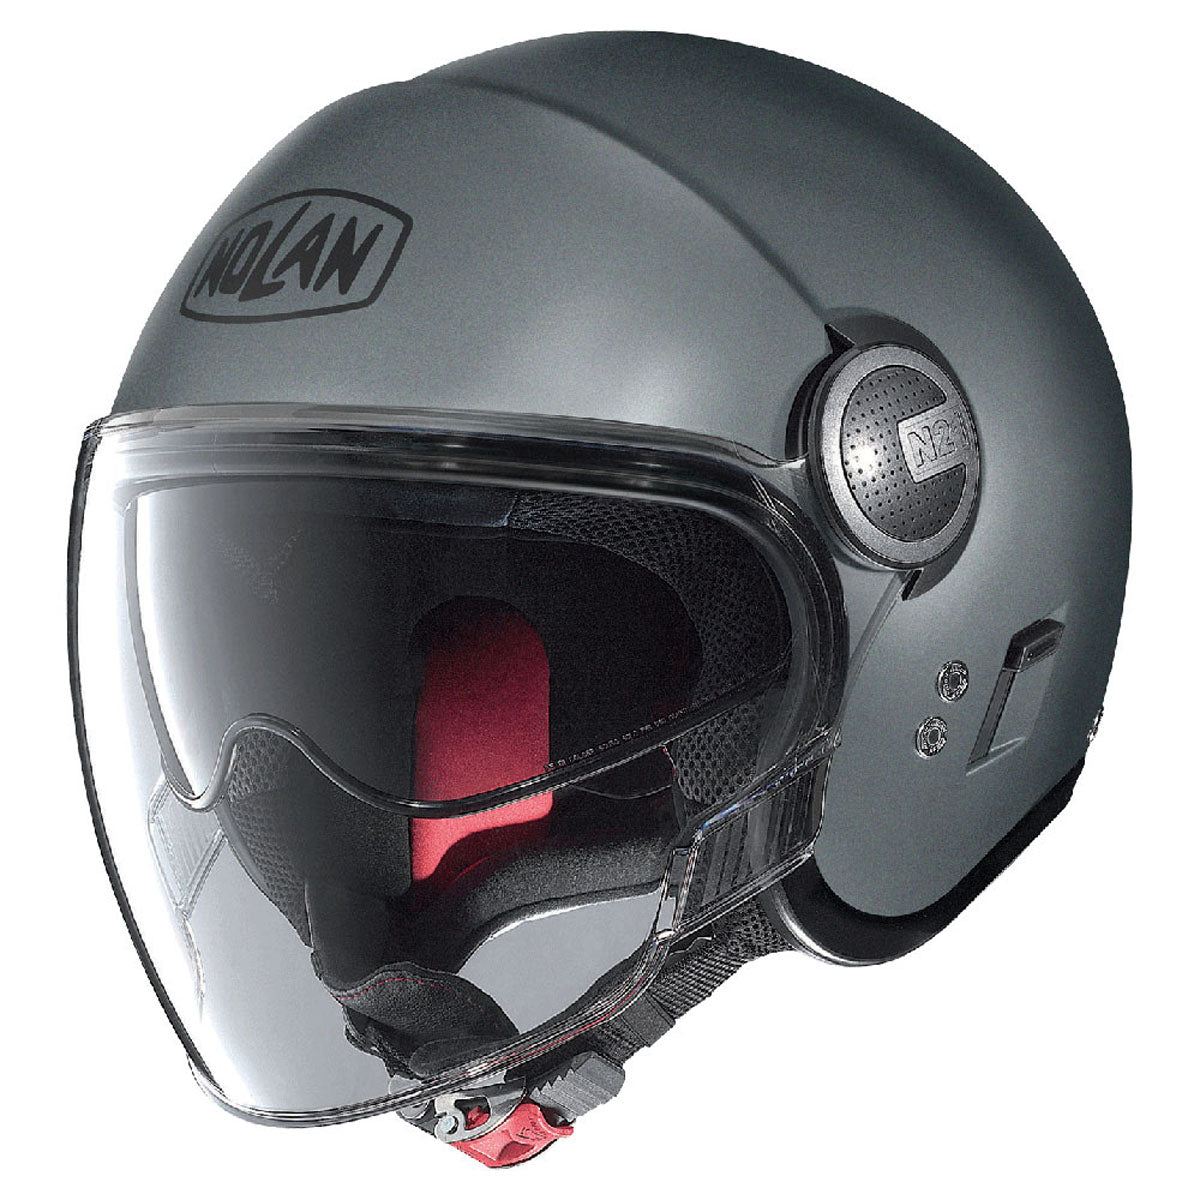 Nolan N21 Visor Helmet